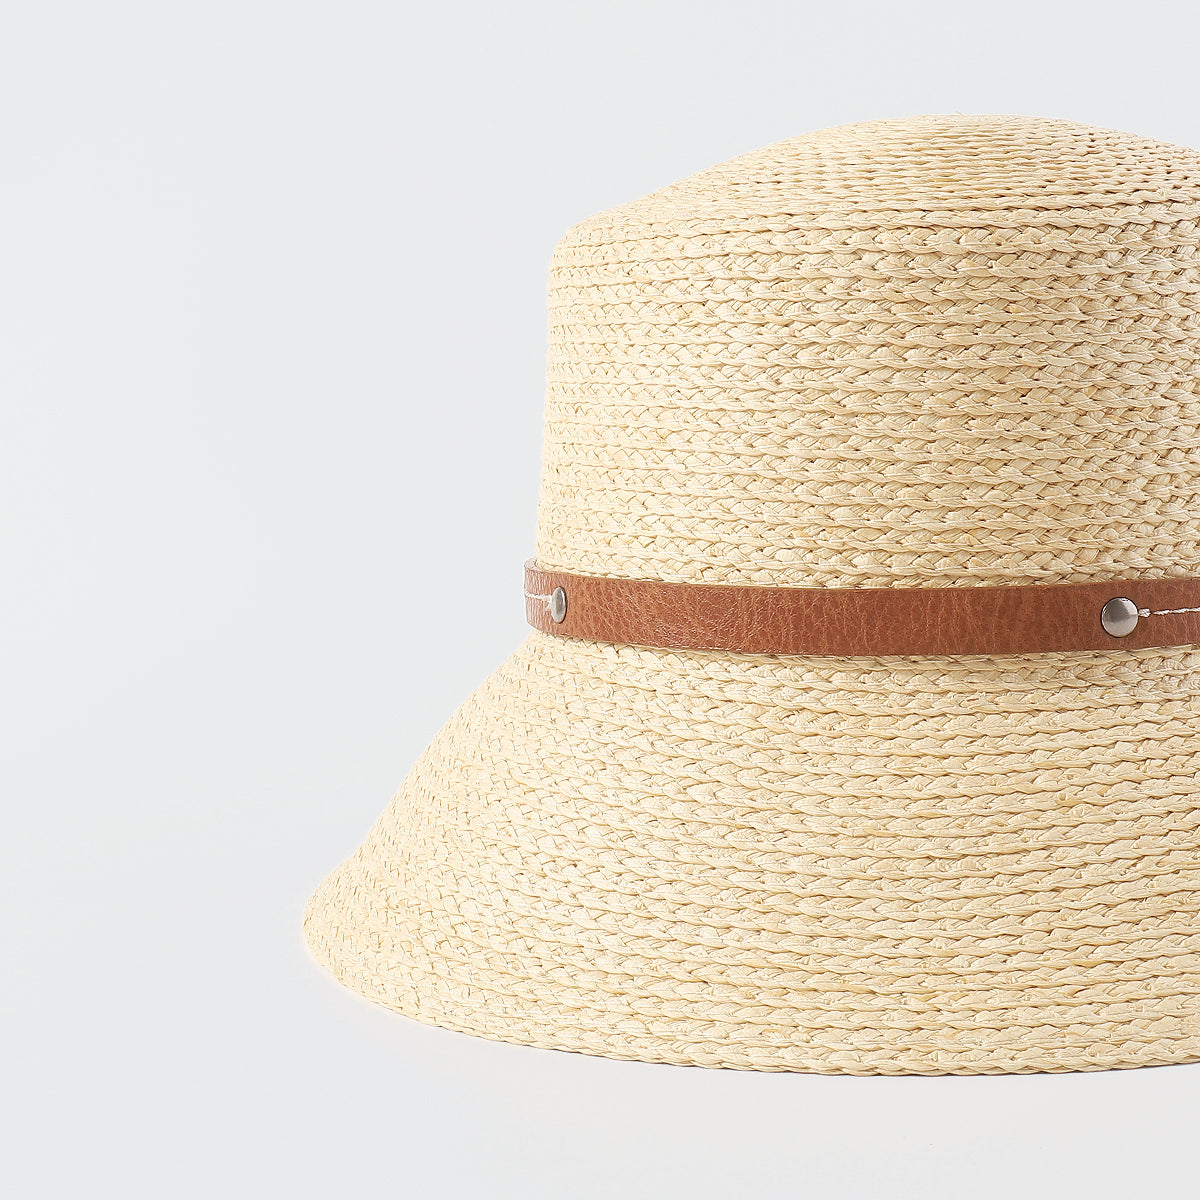 Q0188 Summer Raffia Bucket Hat With PU Trim